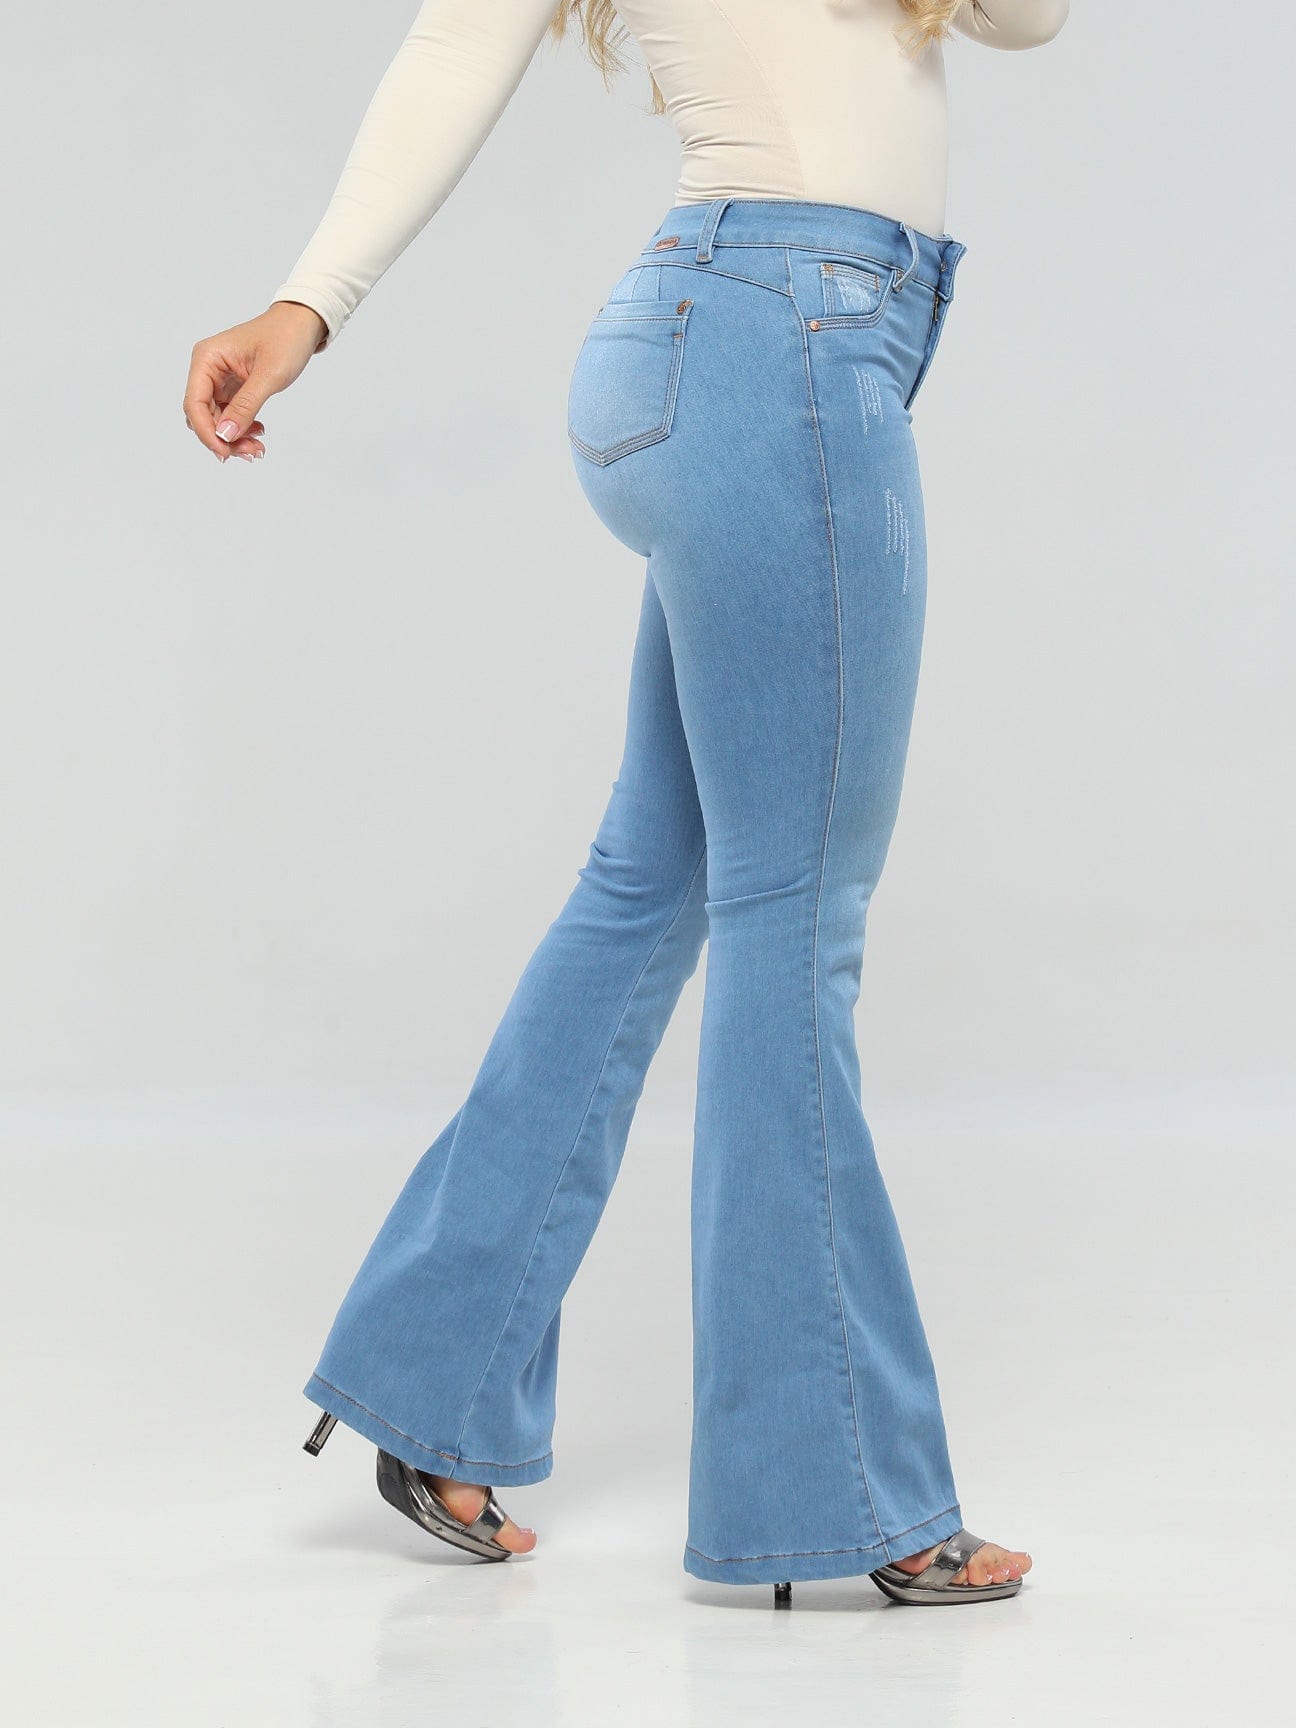 Best 25+ Deals for Bum Lifting Jeans